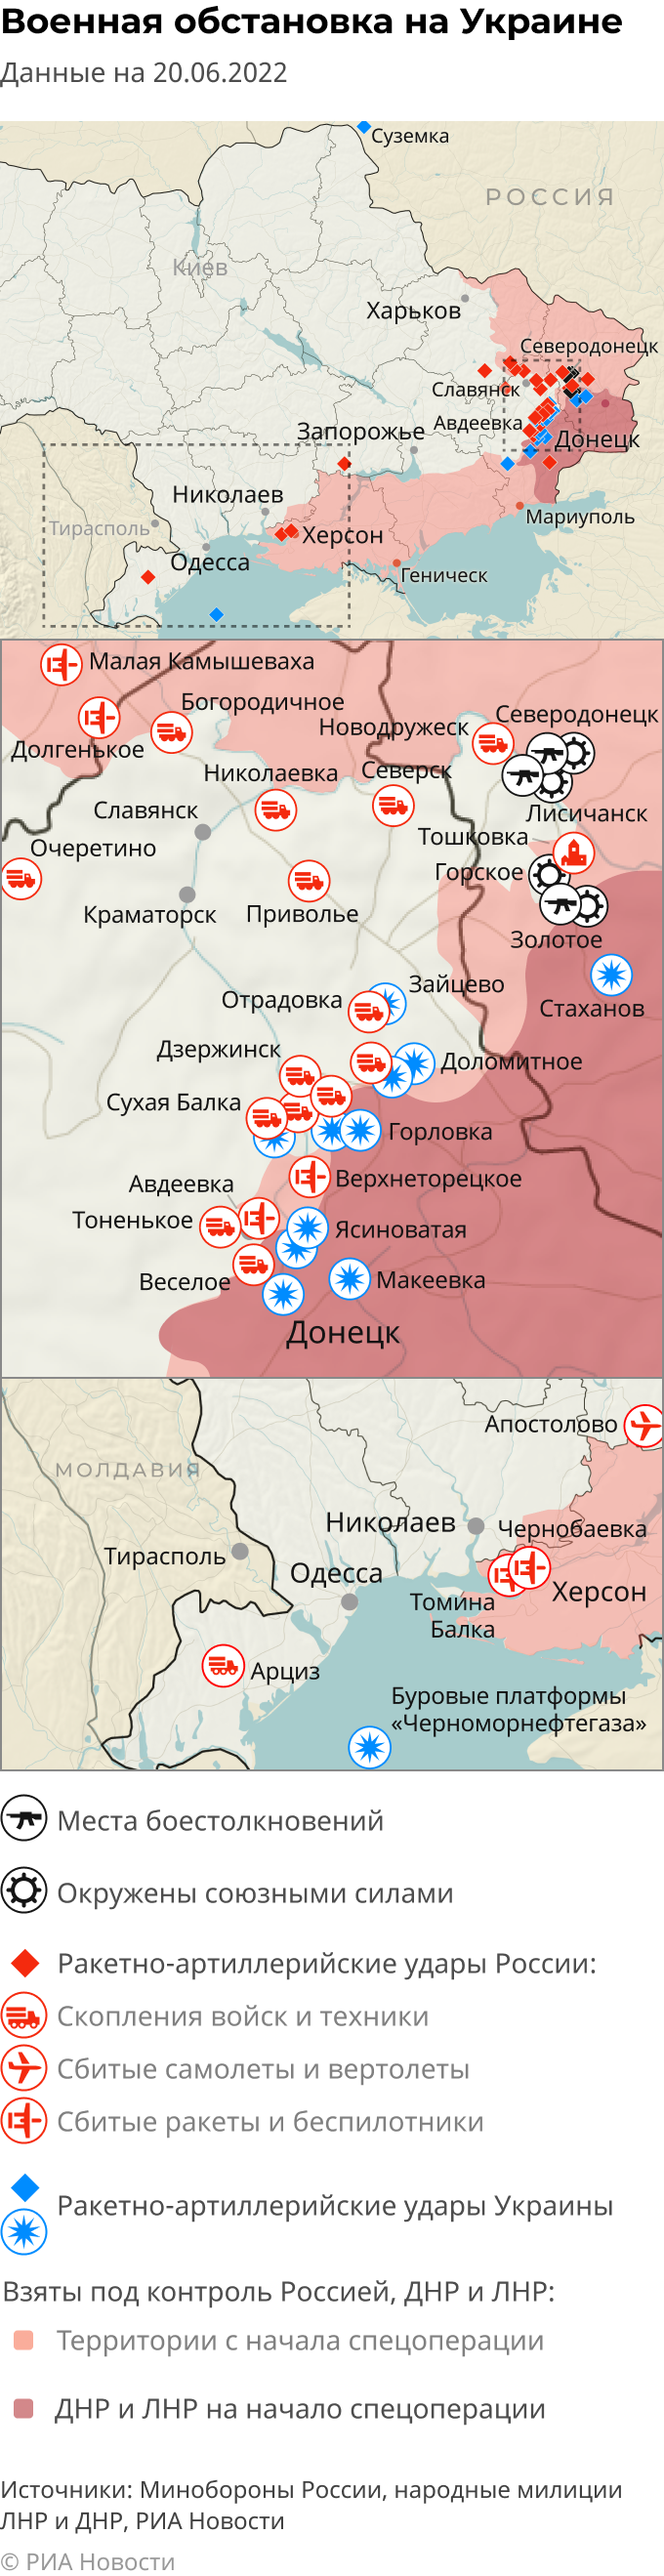 Карта где идут бои на украине на сегодня